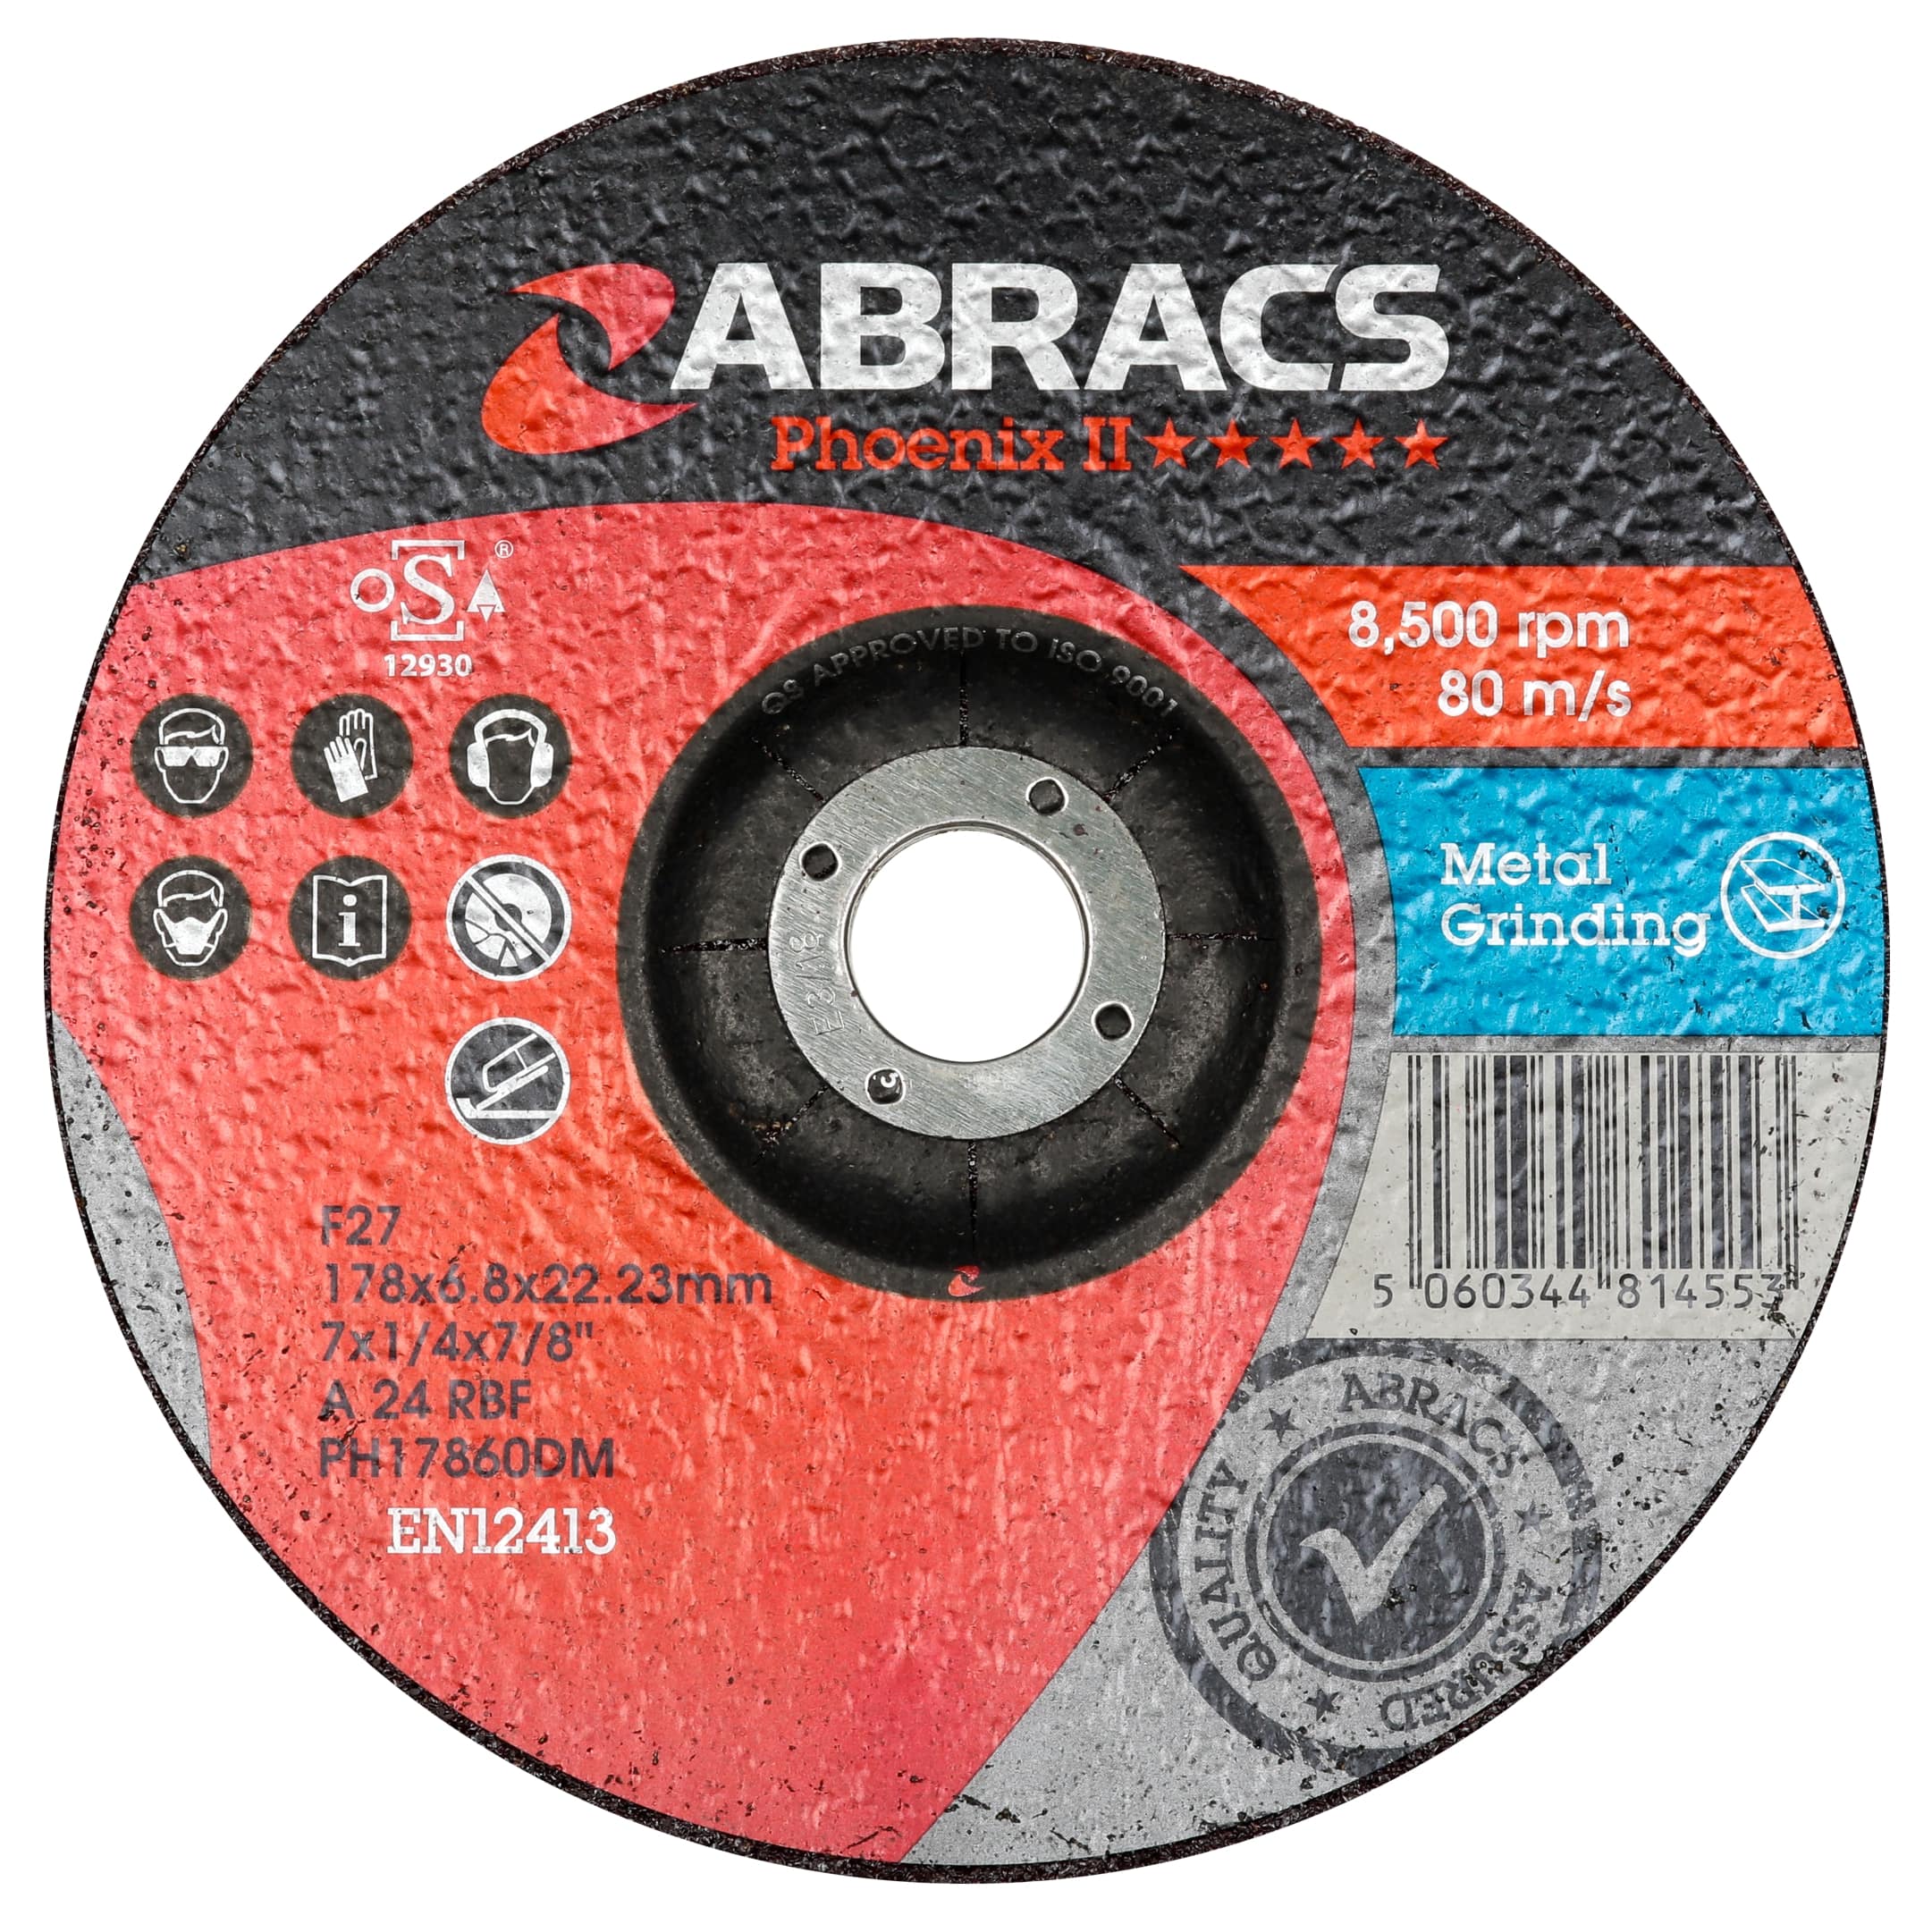 Abracs  PHOENIX II 178mm x 6mm x 22mm DPC METAL Grinding Disc